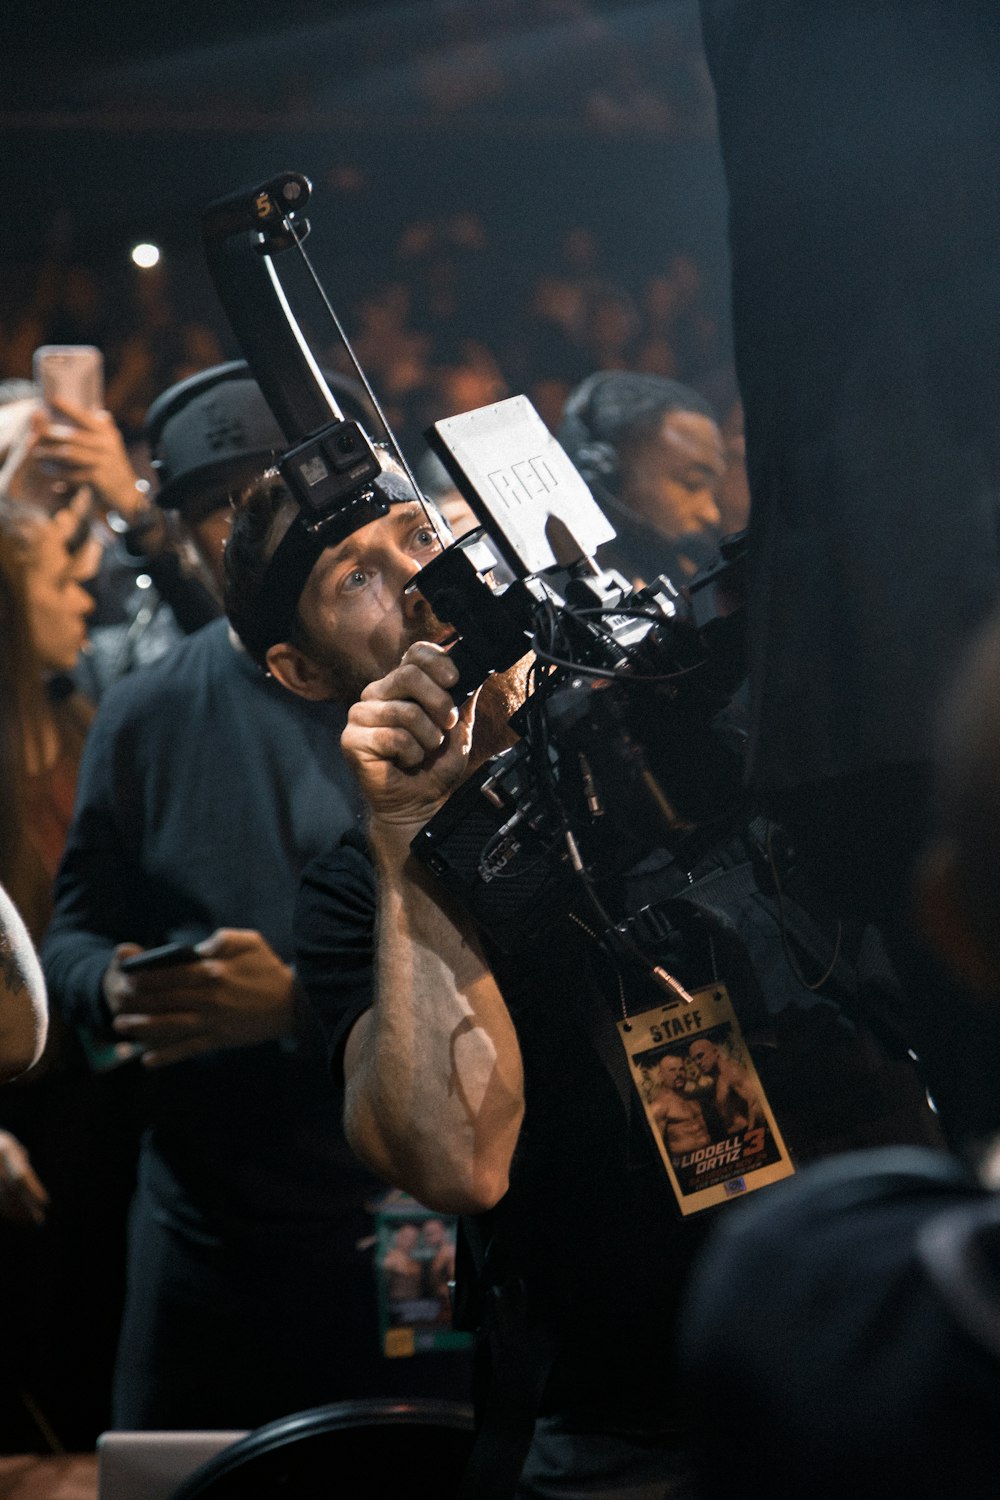 man holding professional video camera